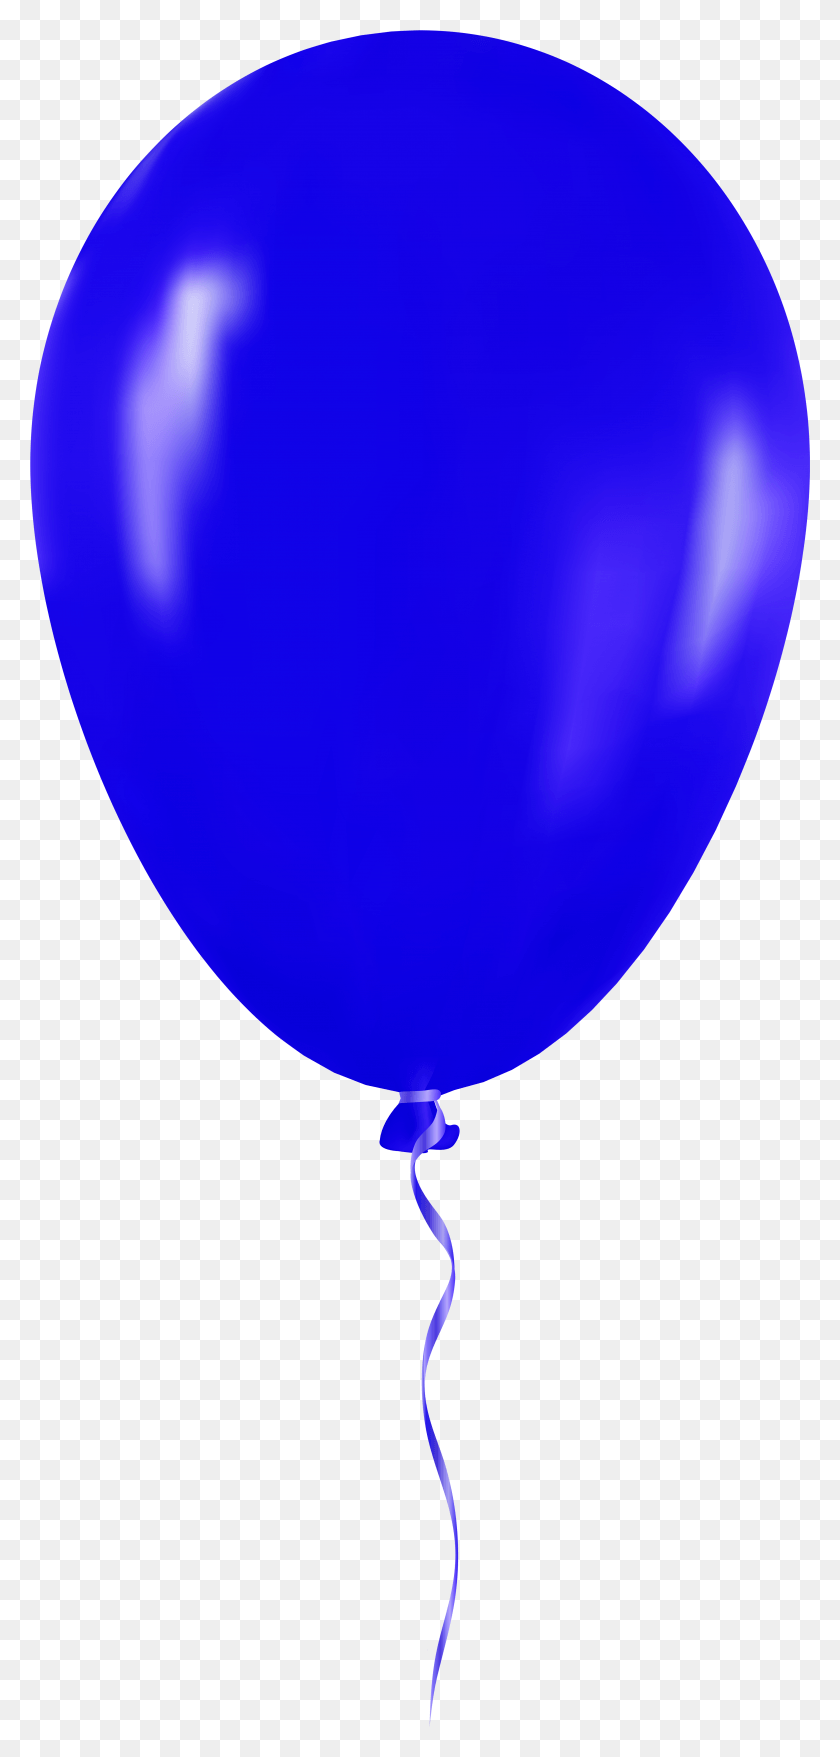 3613x7865 Синий Воздушный Шар Картинки Прозрачный Фон Фиолетовый Воздушный Шар Клипарт, Мяч Hd Png Скачать